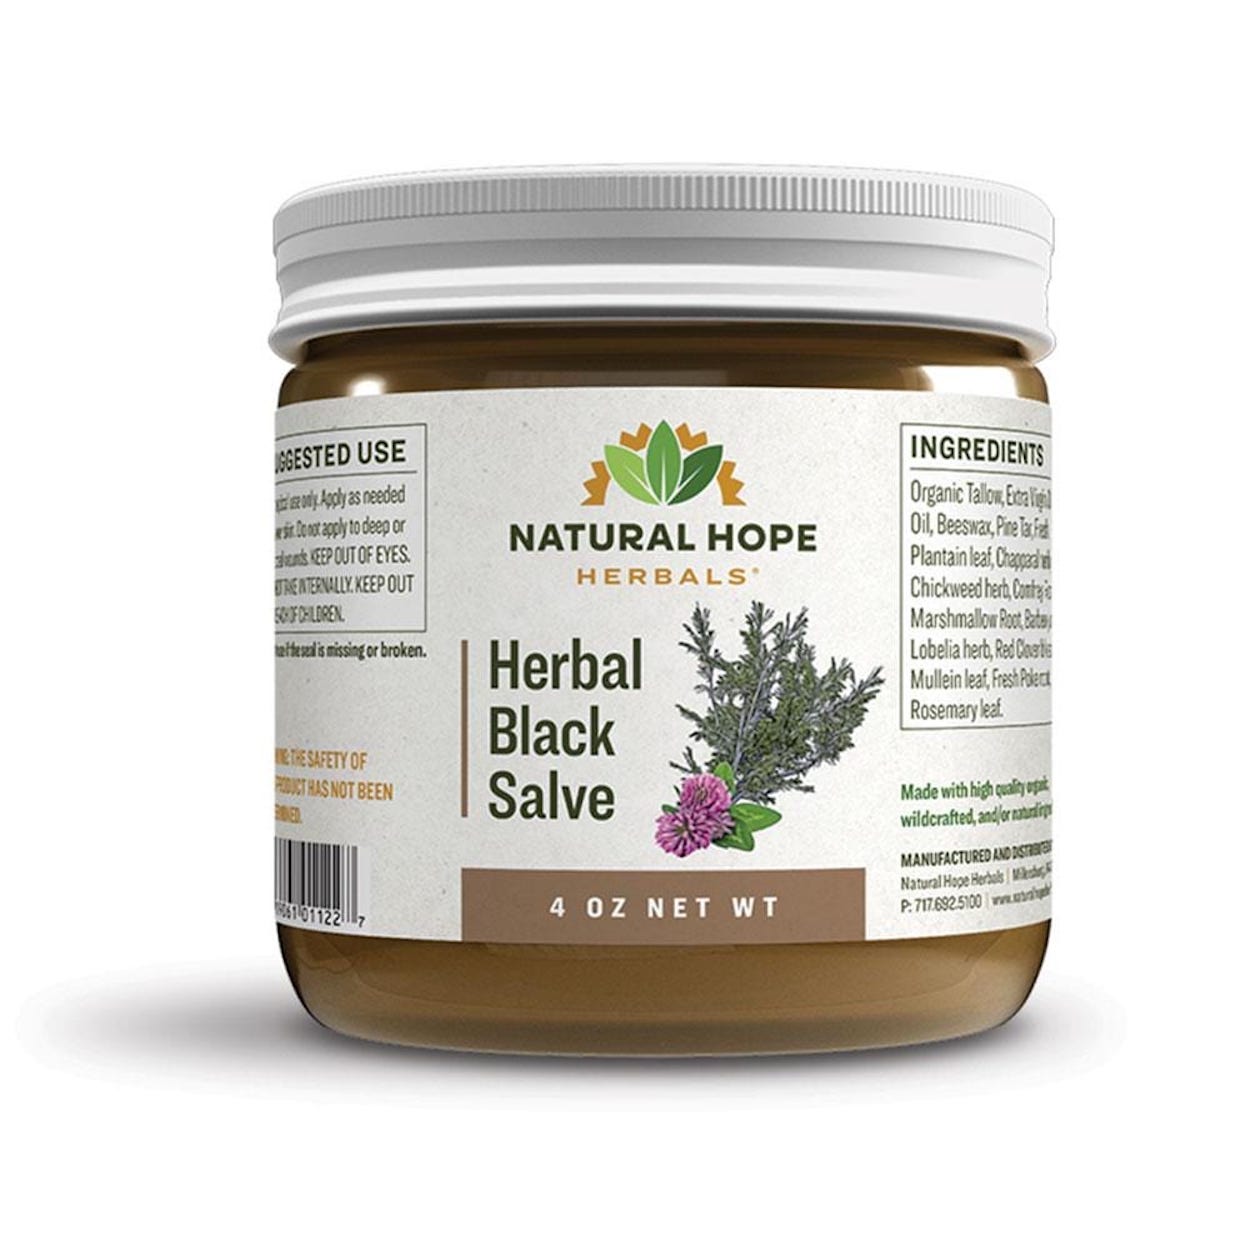 Herbal Black Salve - Natural Hope Herbals